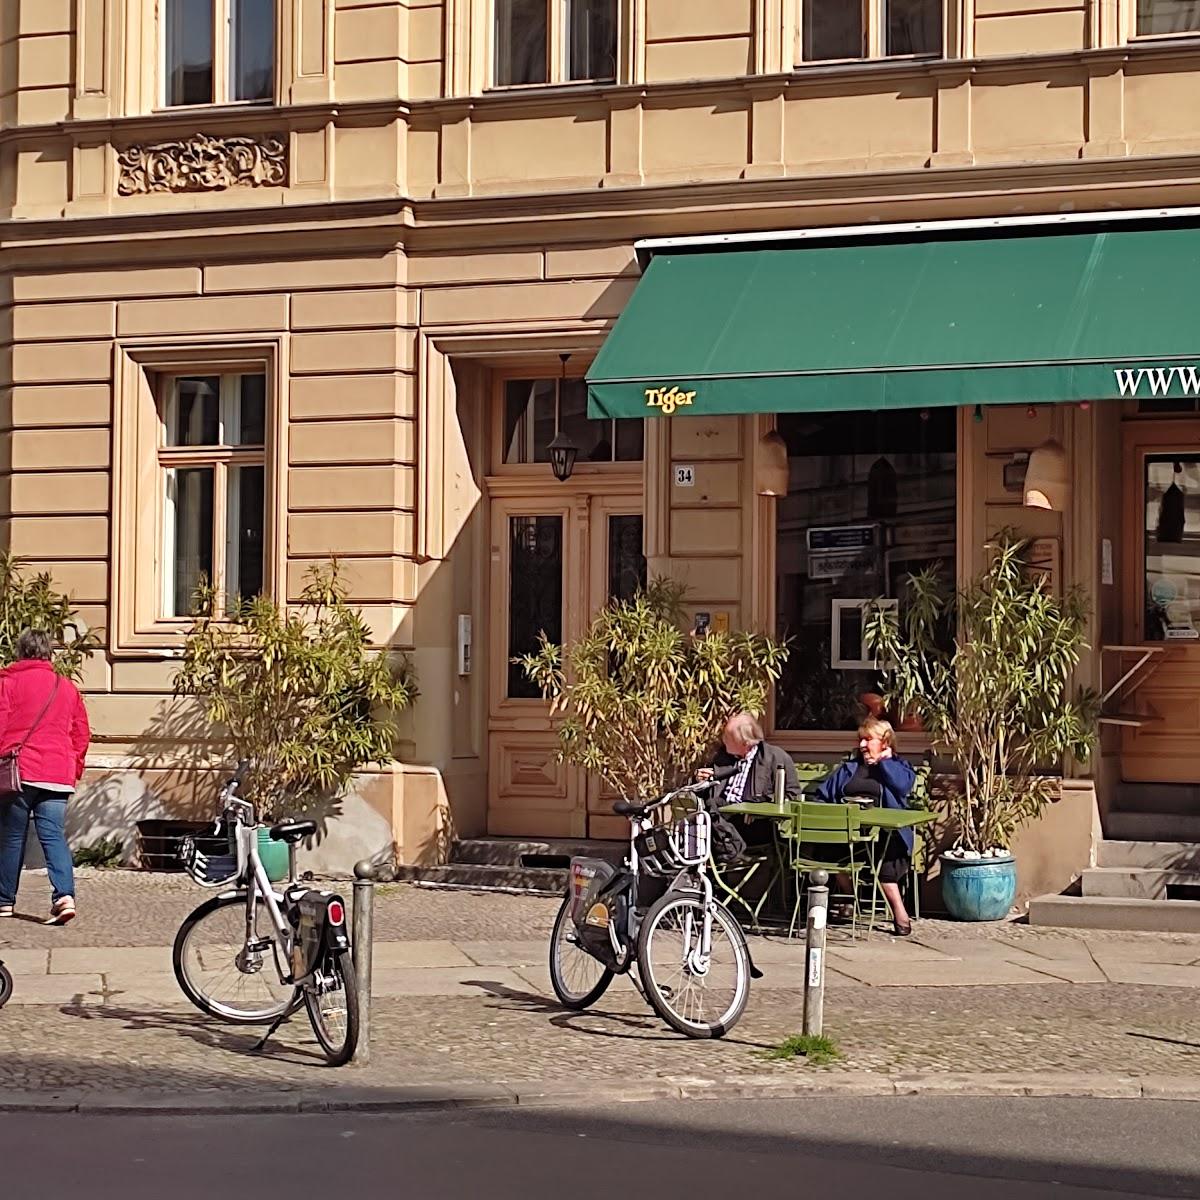 Restaurant "Maison Dang" in Berlin